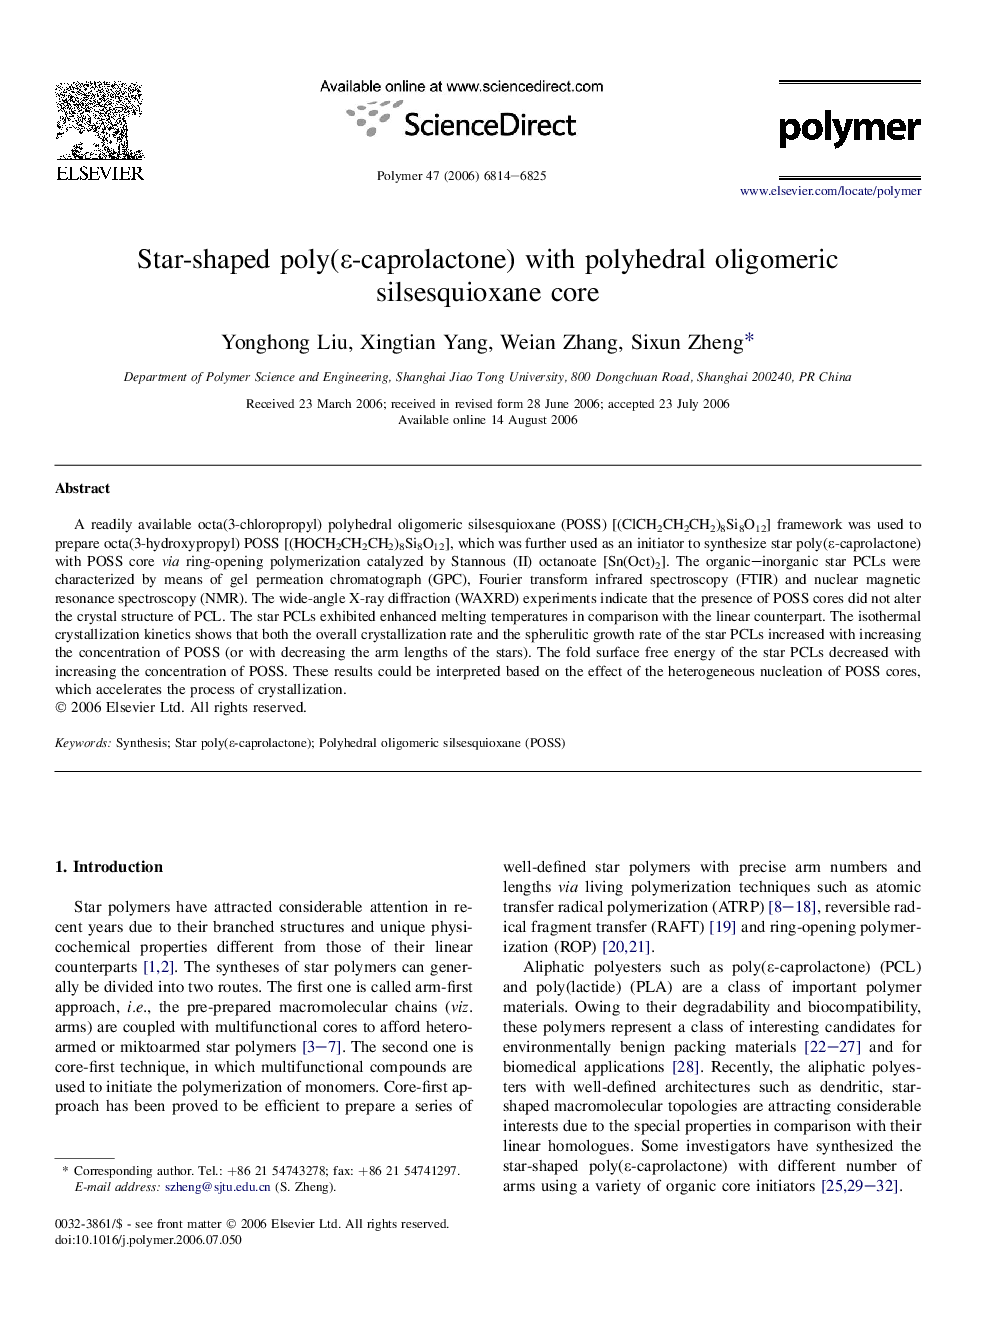 Star-shaped poly(É-caprolactone) with polyhedral oligomeric silsesquioxane core